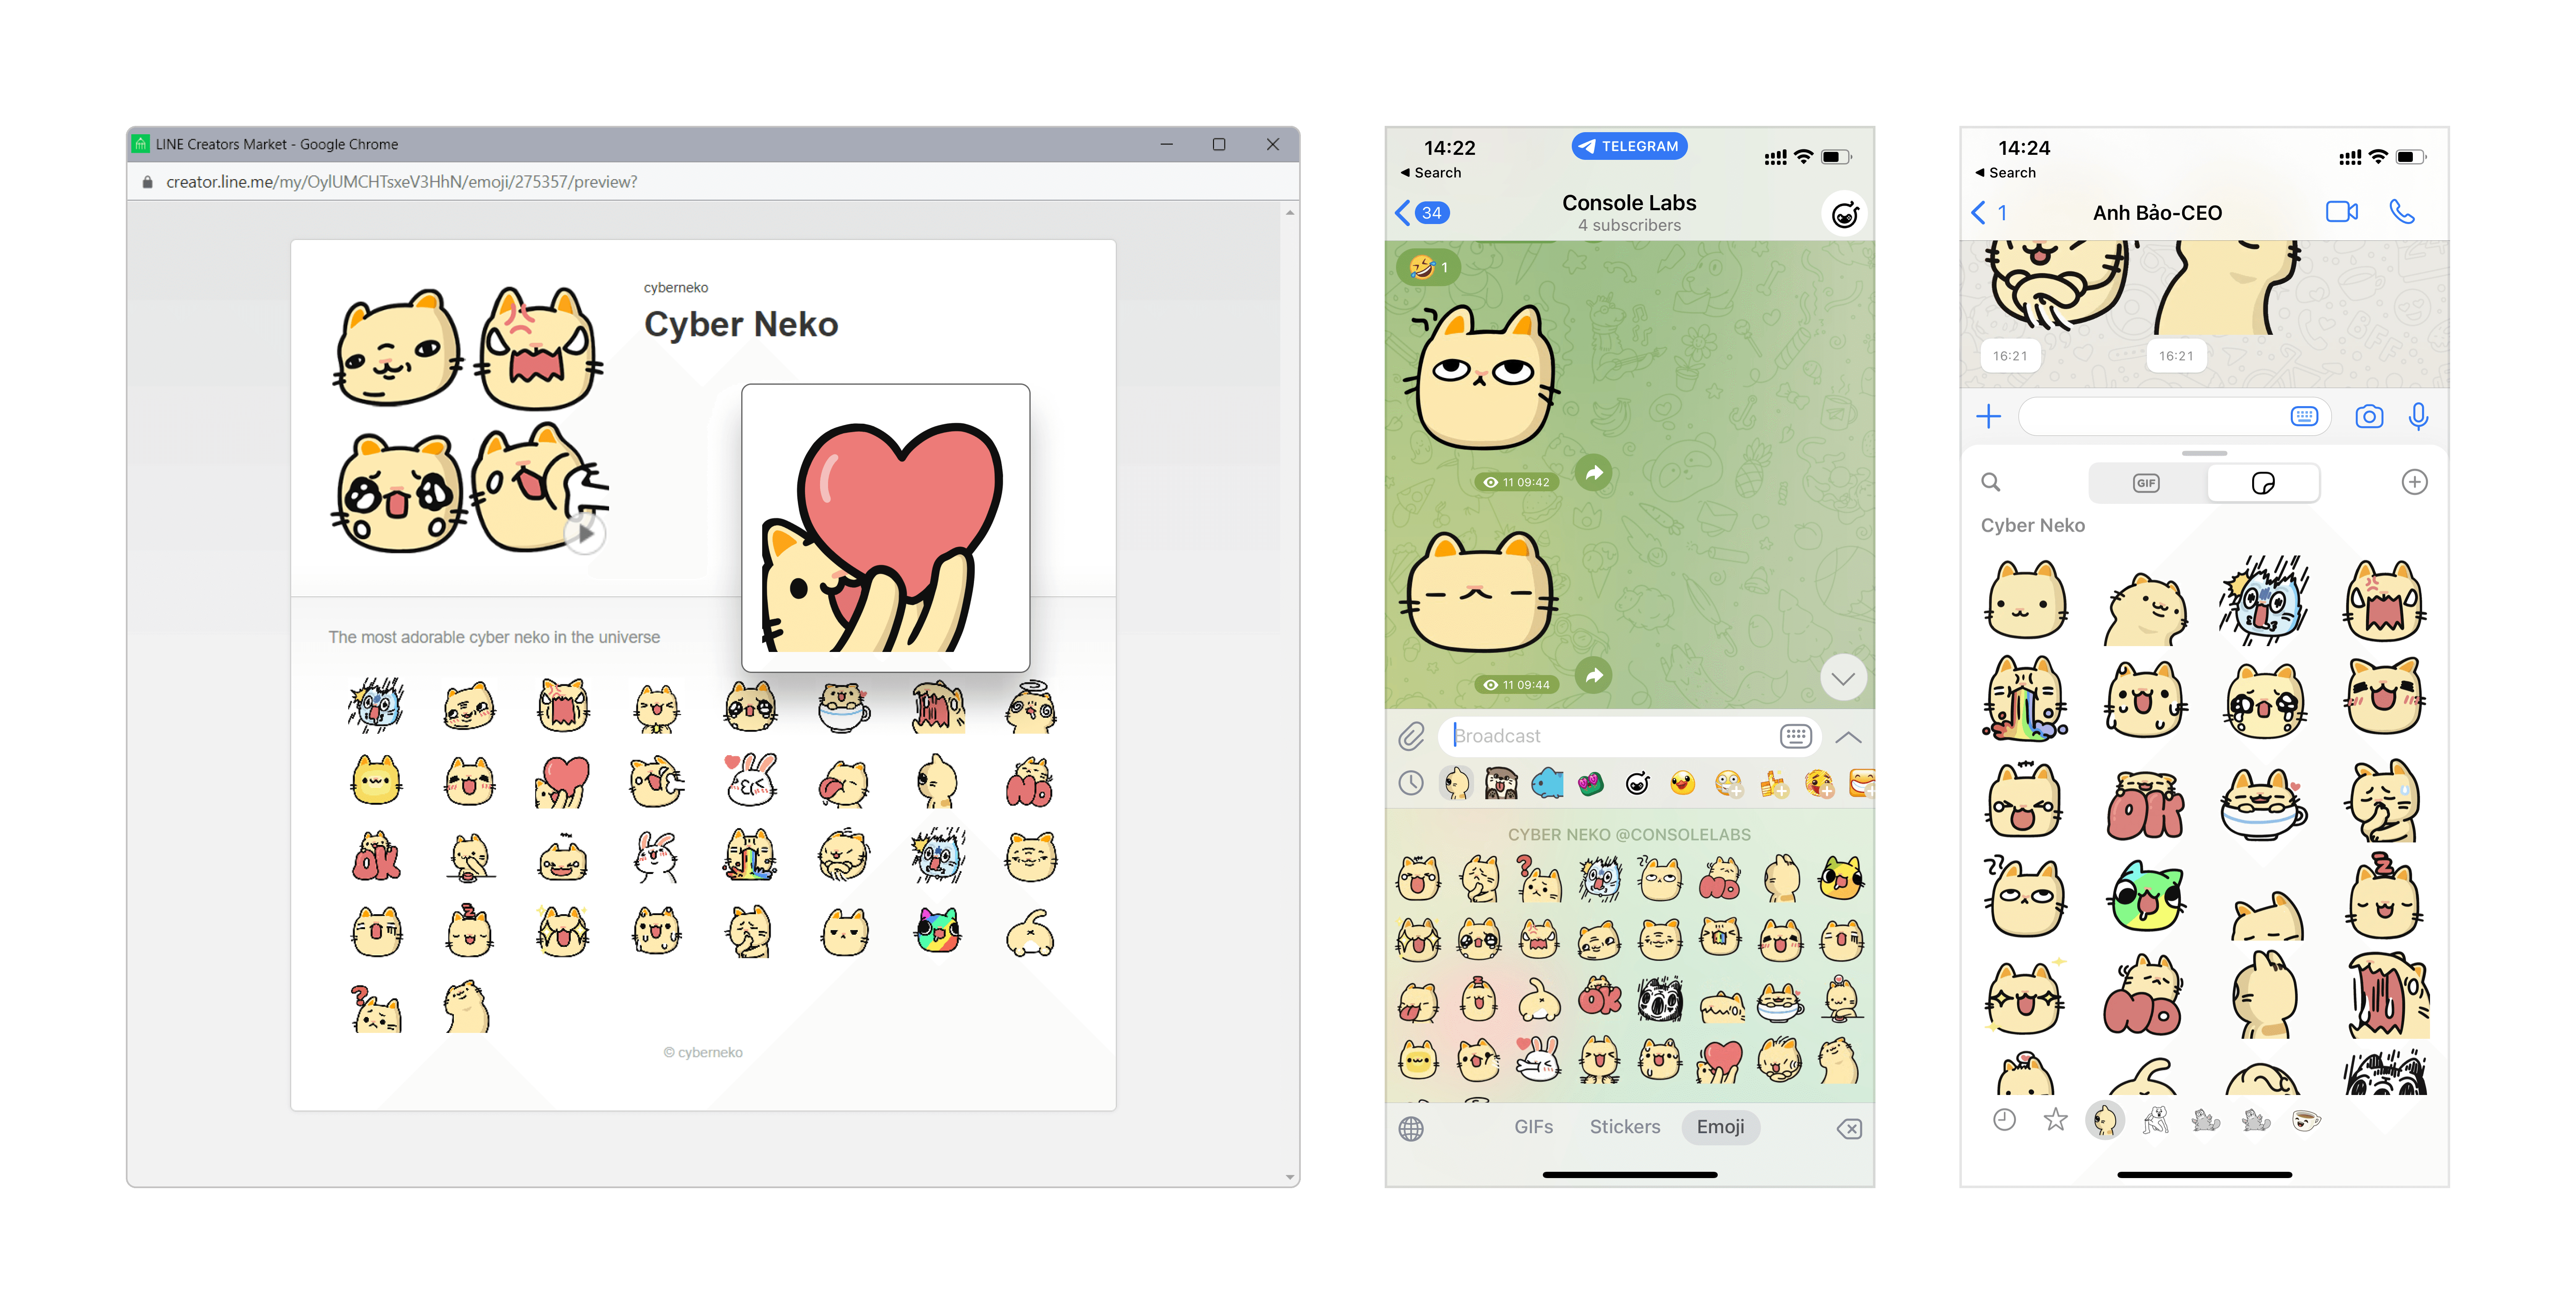 images/experiments/emoji/emoji_7.png